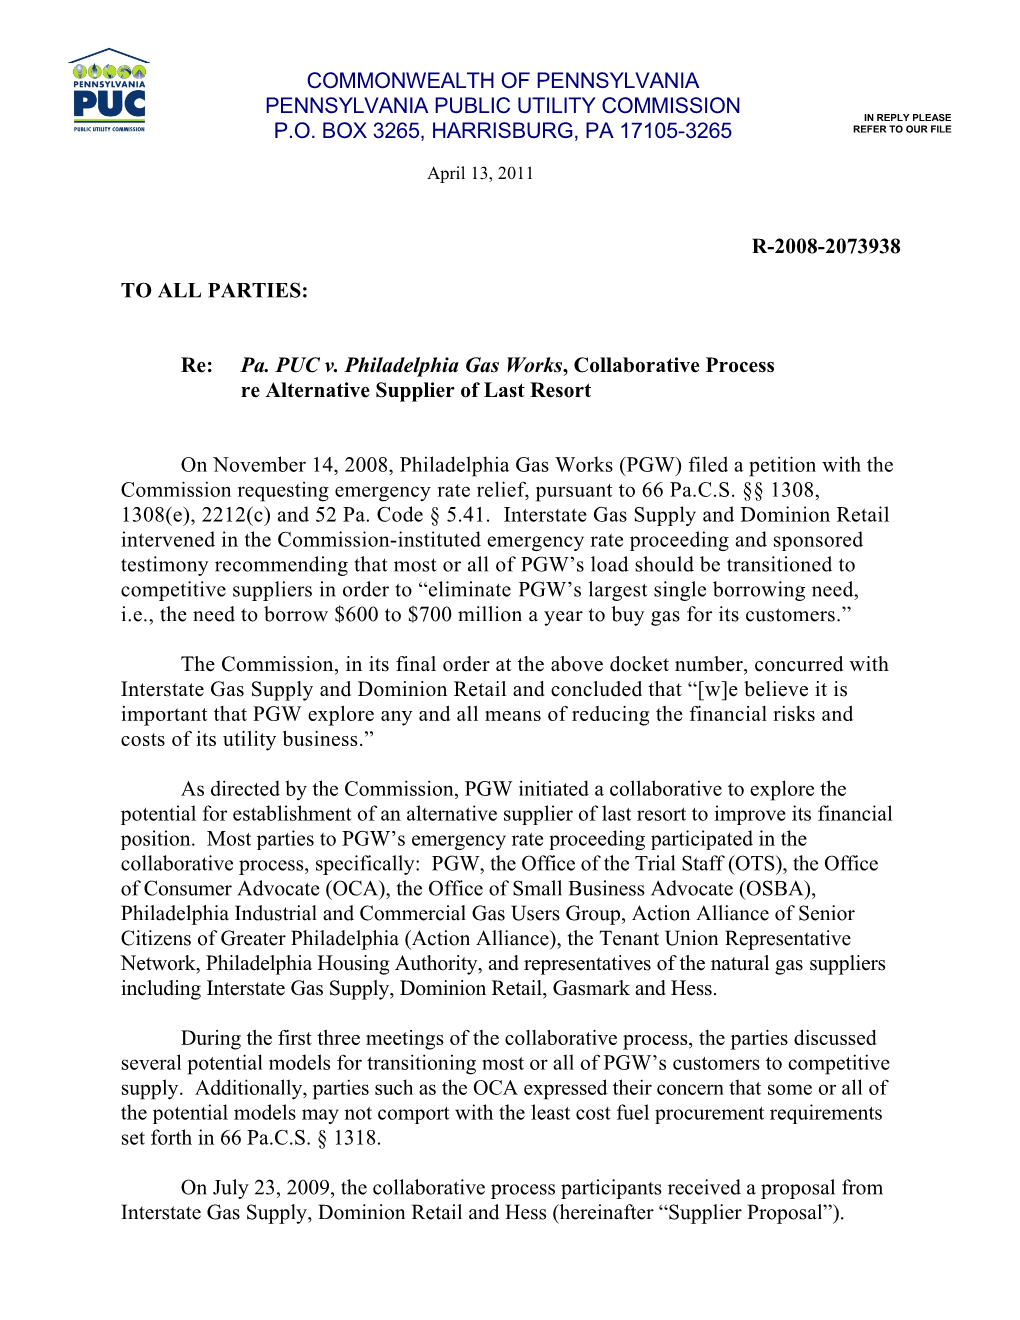 Re: Pa. PUC V. Philadelphia Gas Works, Collaborative Process